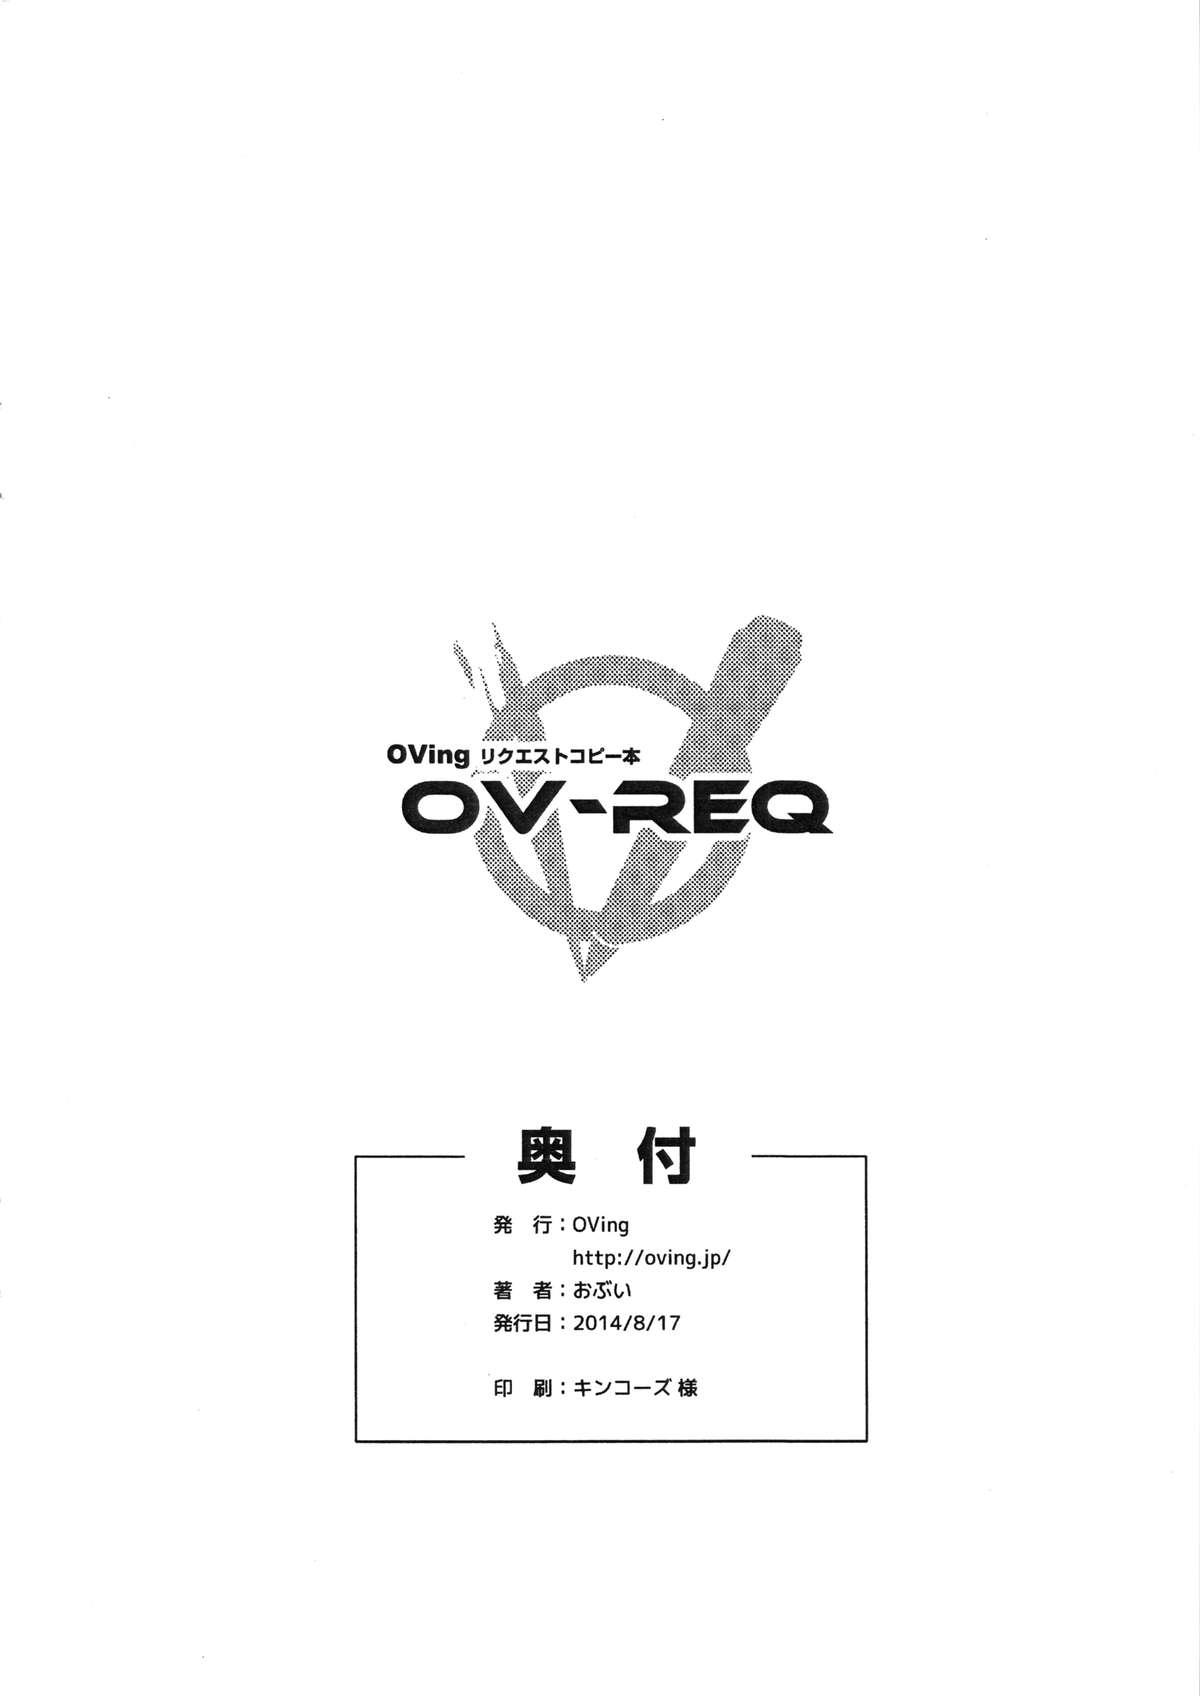 Hentai Marionette 2 + OV - REQ 33